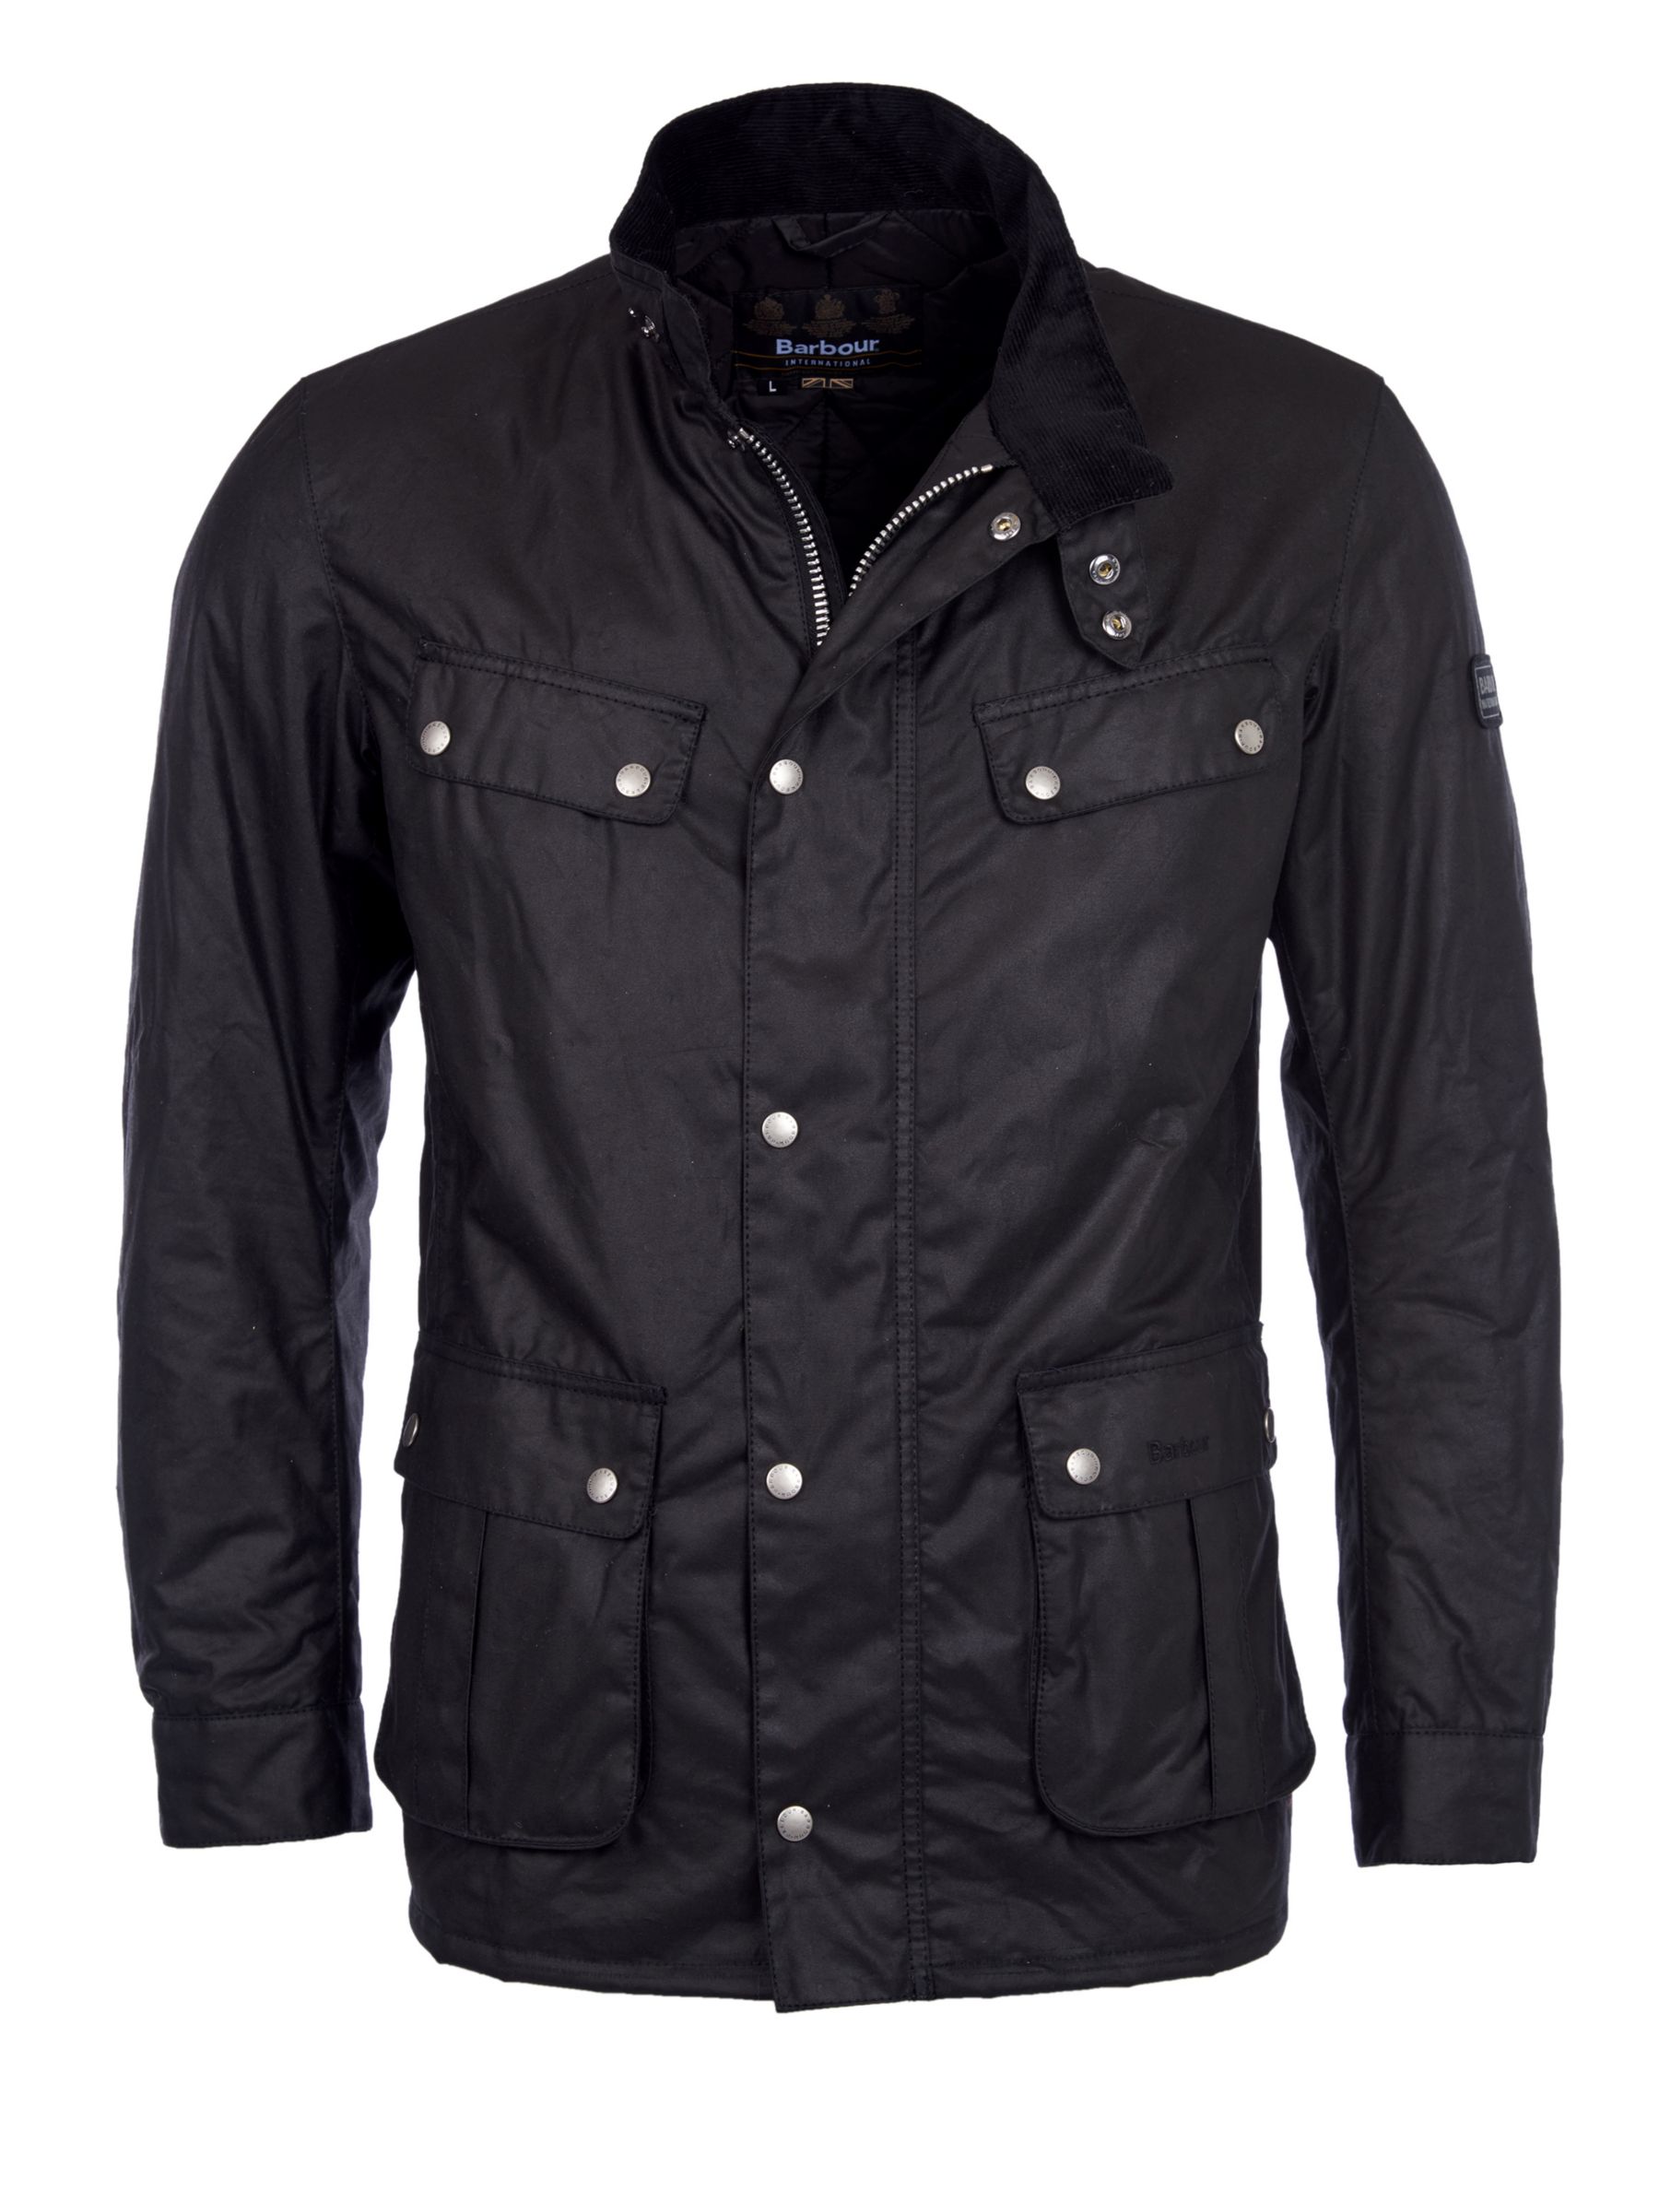 Barbour International Duke Waxed Cotton Jacket, Black, S